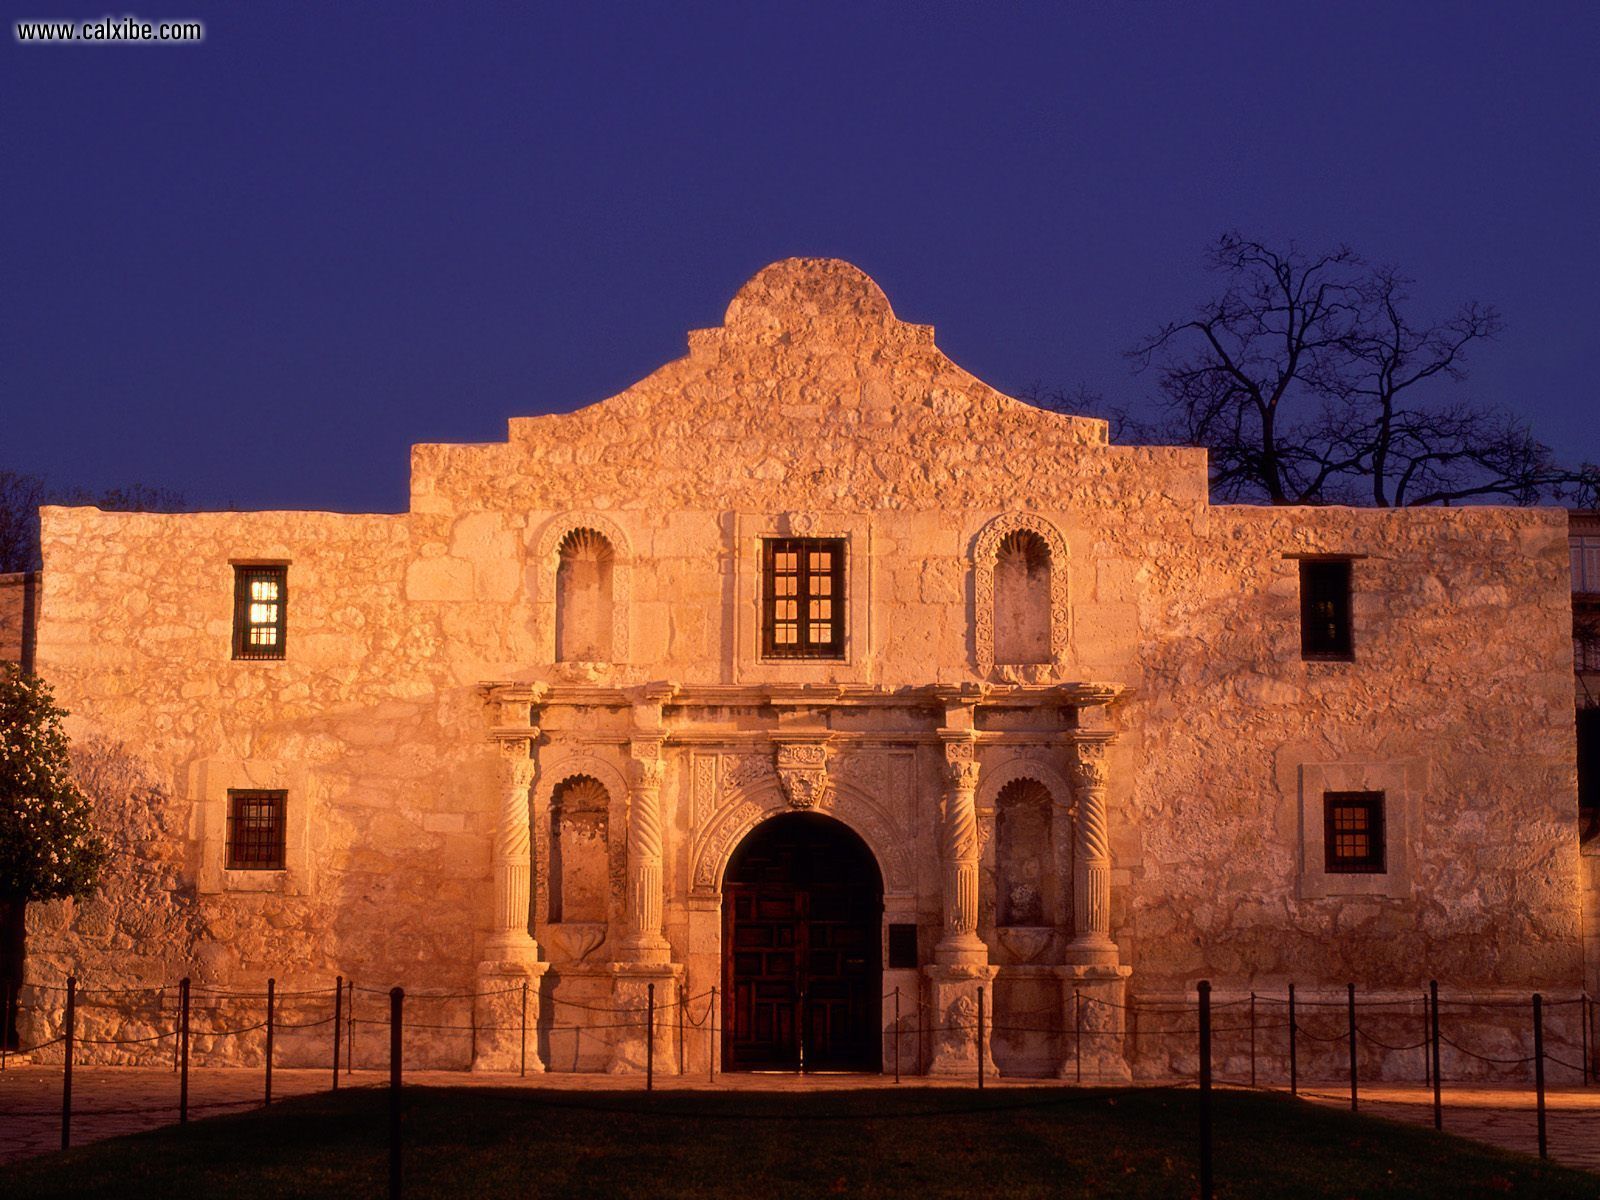  City Remember the Alamo San Antonio Texas picture nr 13634